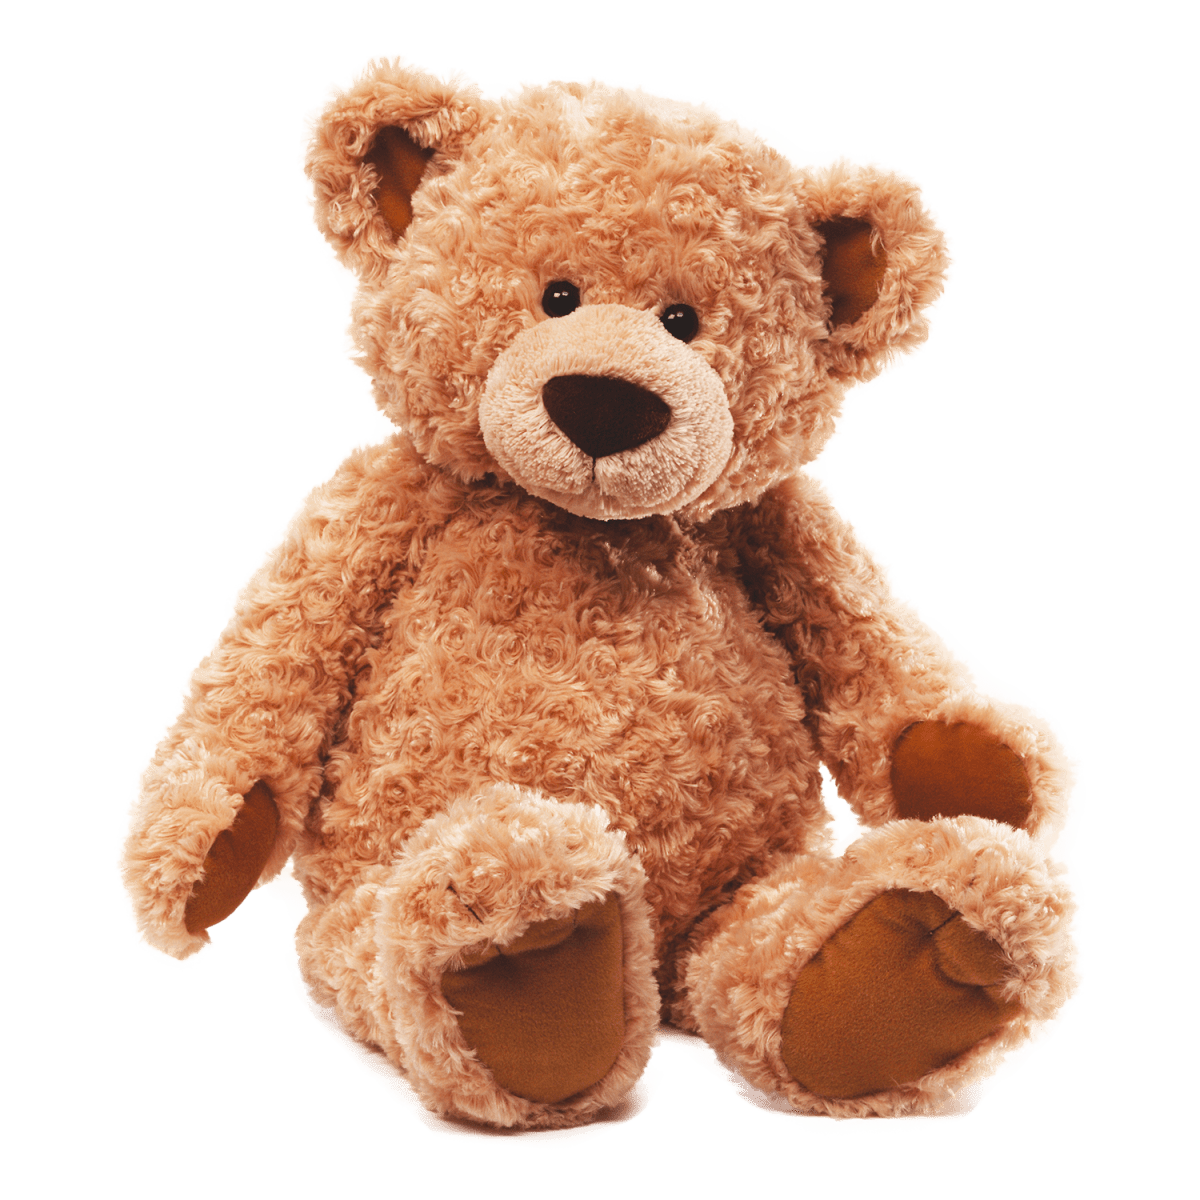 Teddy Bear product image